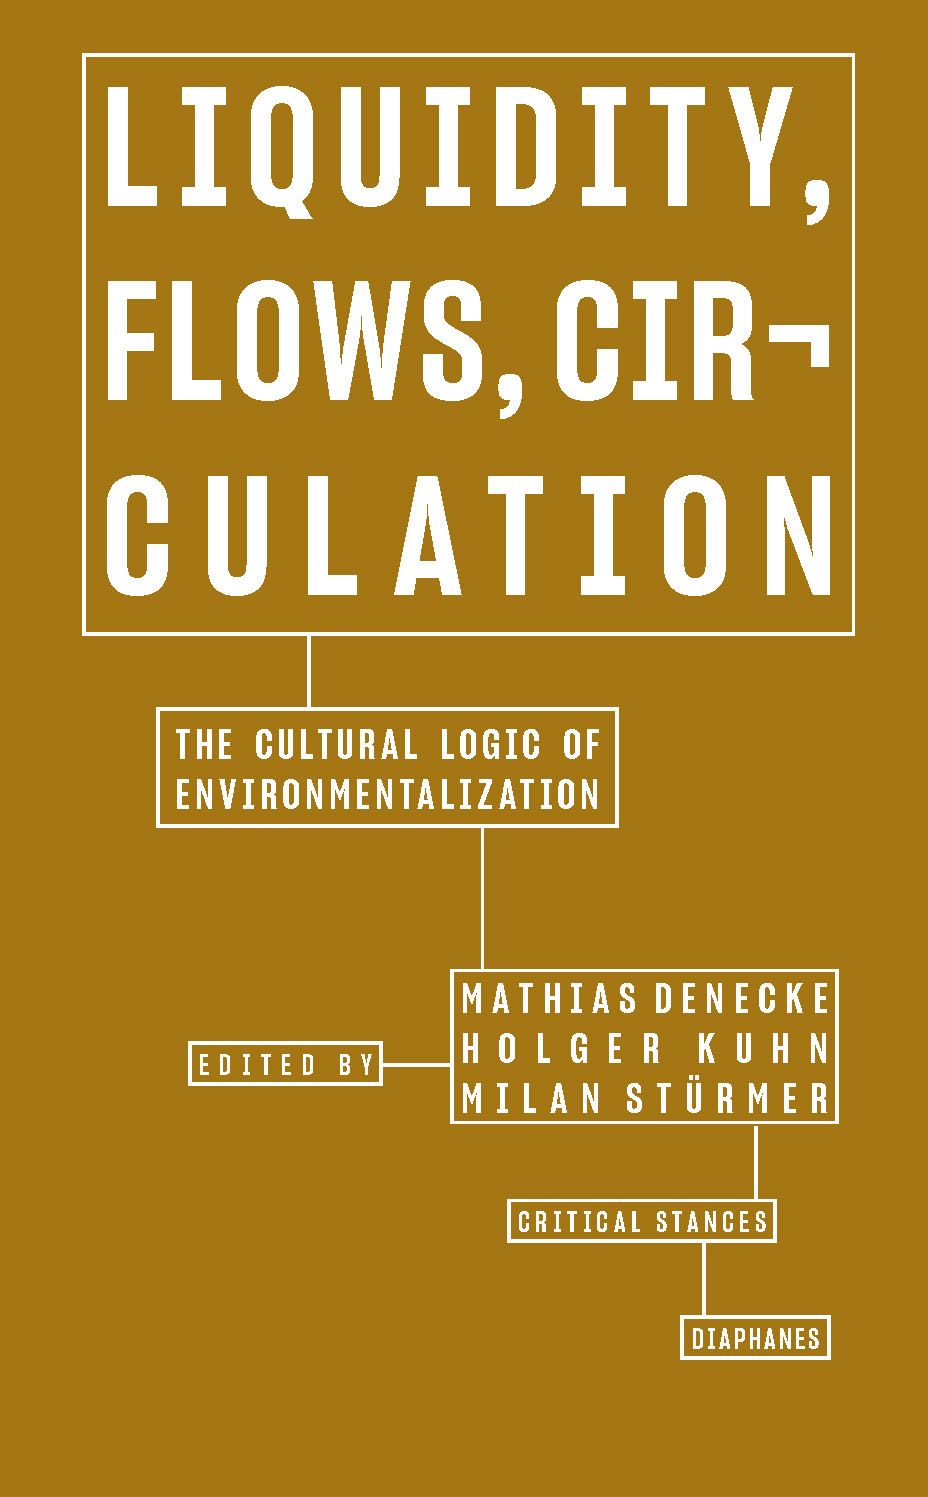 Liquidity, Flows, Circulation: The Cultural Logic of Environmentalization,  Denecke, Kuhn, Stürmer